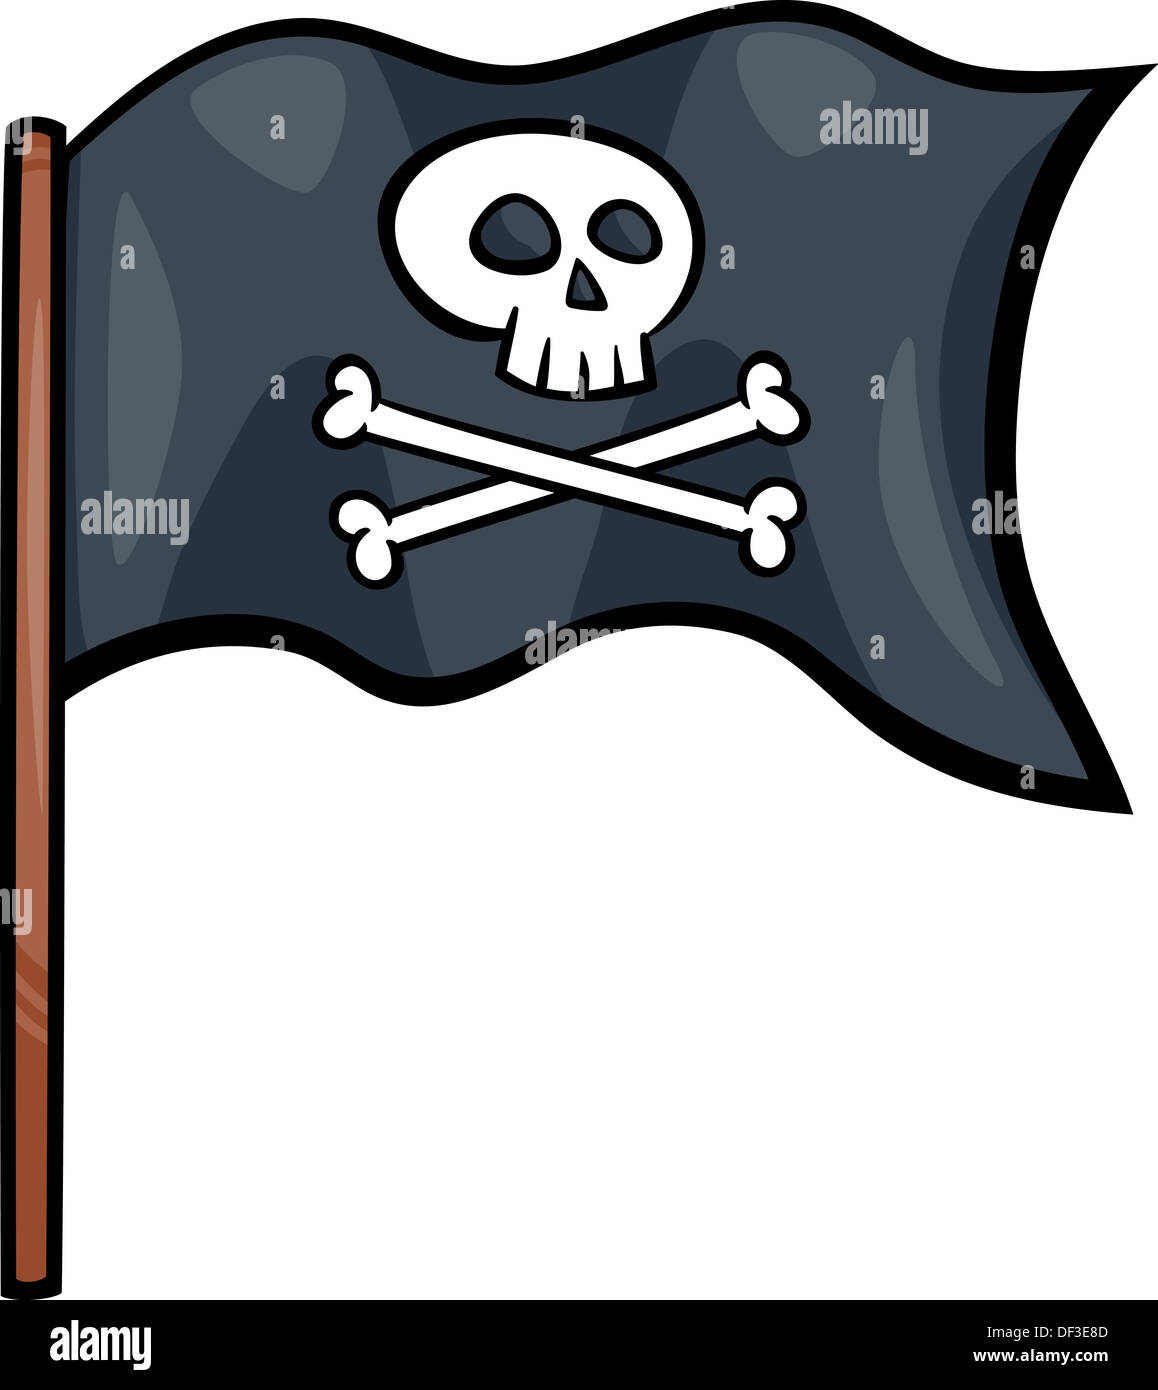 Bandera pirata de dibujos animados fotografías e imágenes de alta  resolución - Alamy